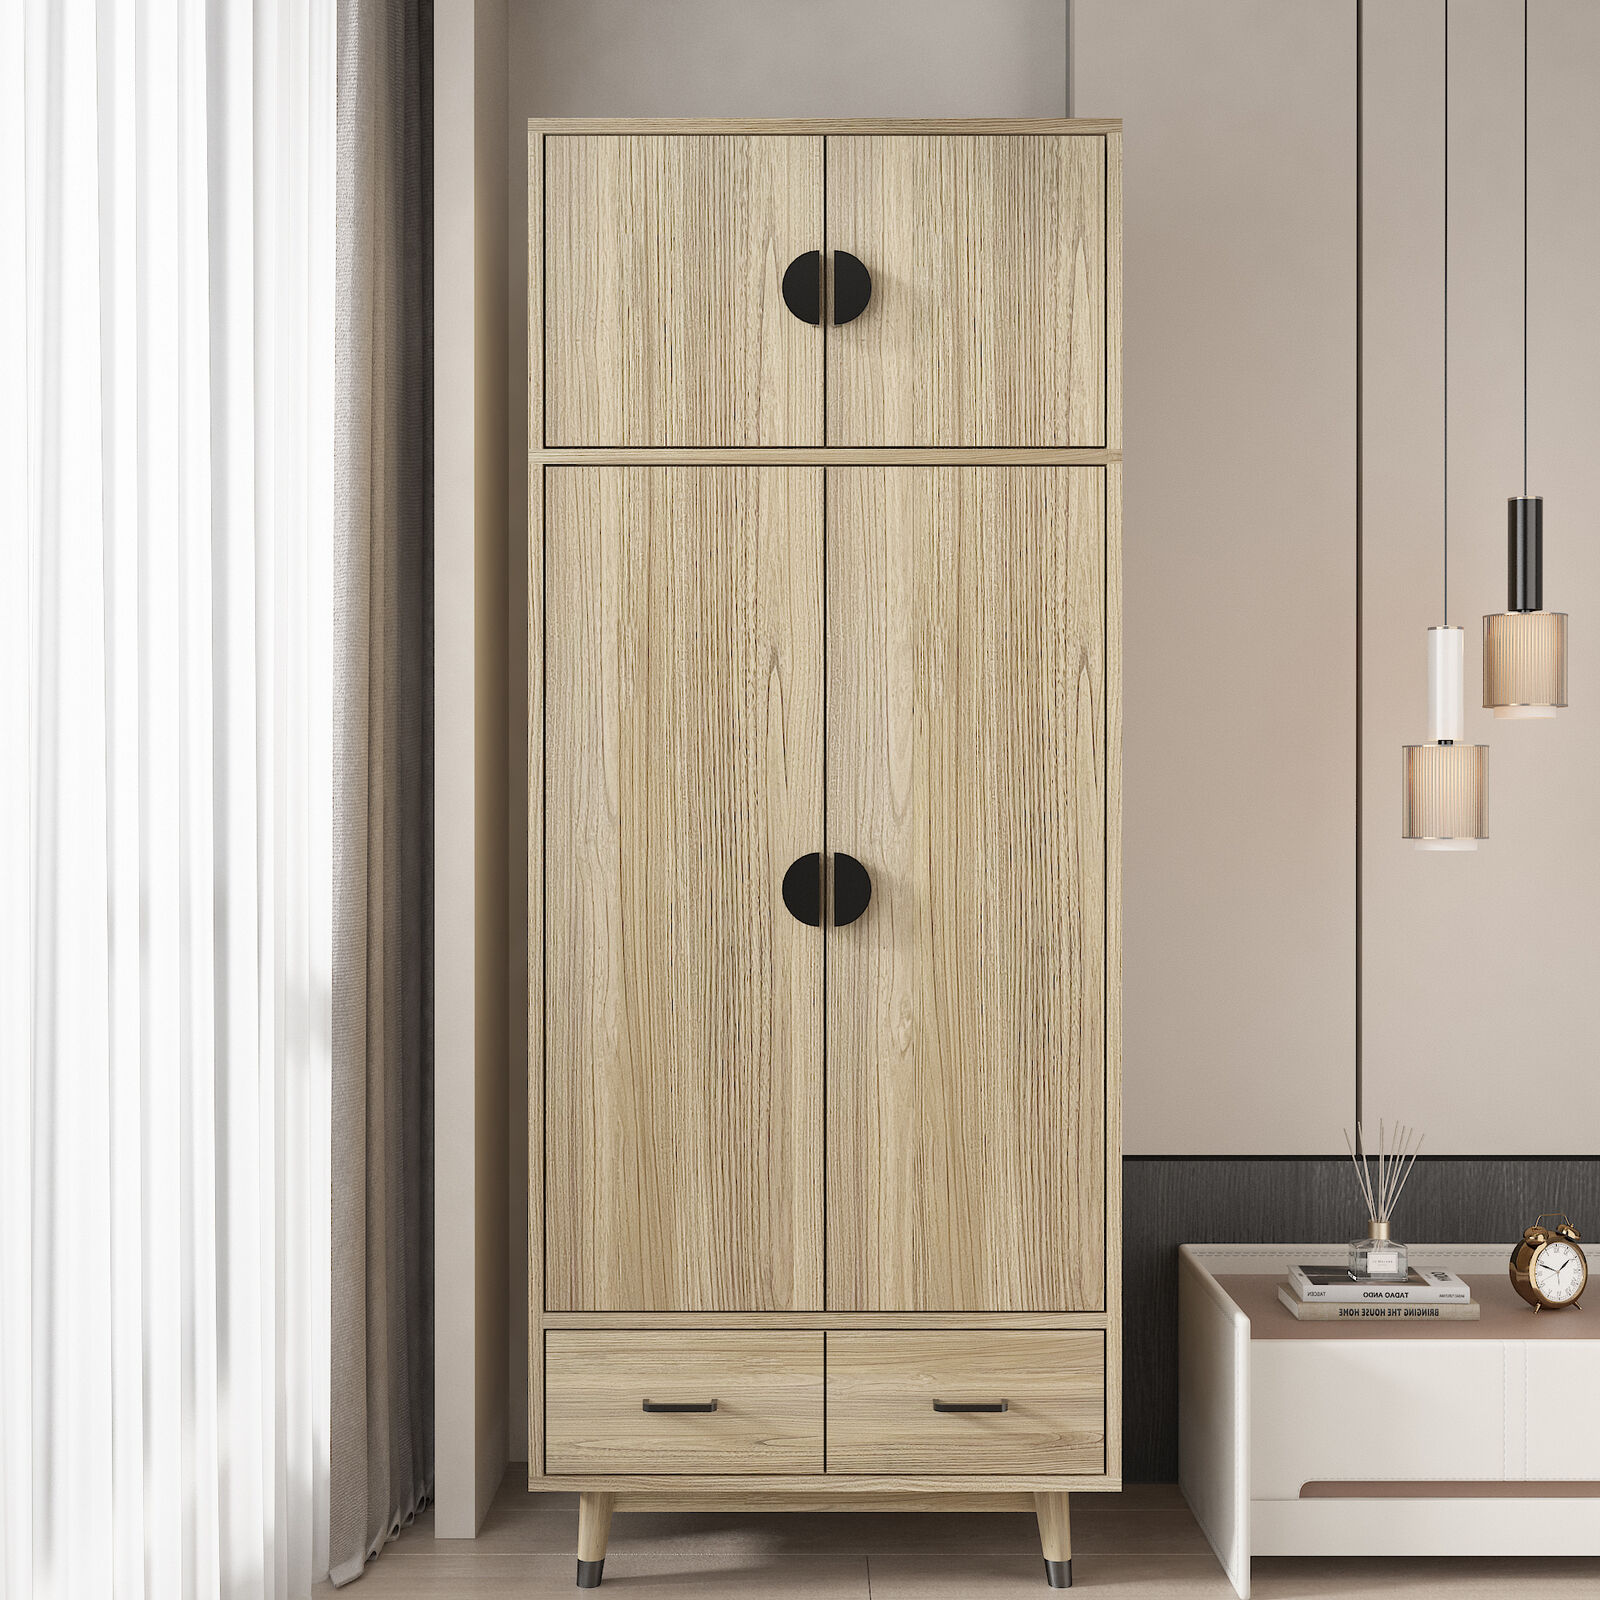 thinkstar Wood 2-Doors Wardrobe Armoire With Drawers Bedroom Storage Cabinet In Brown